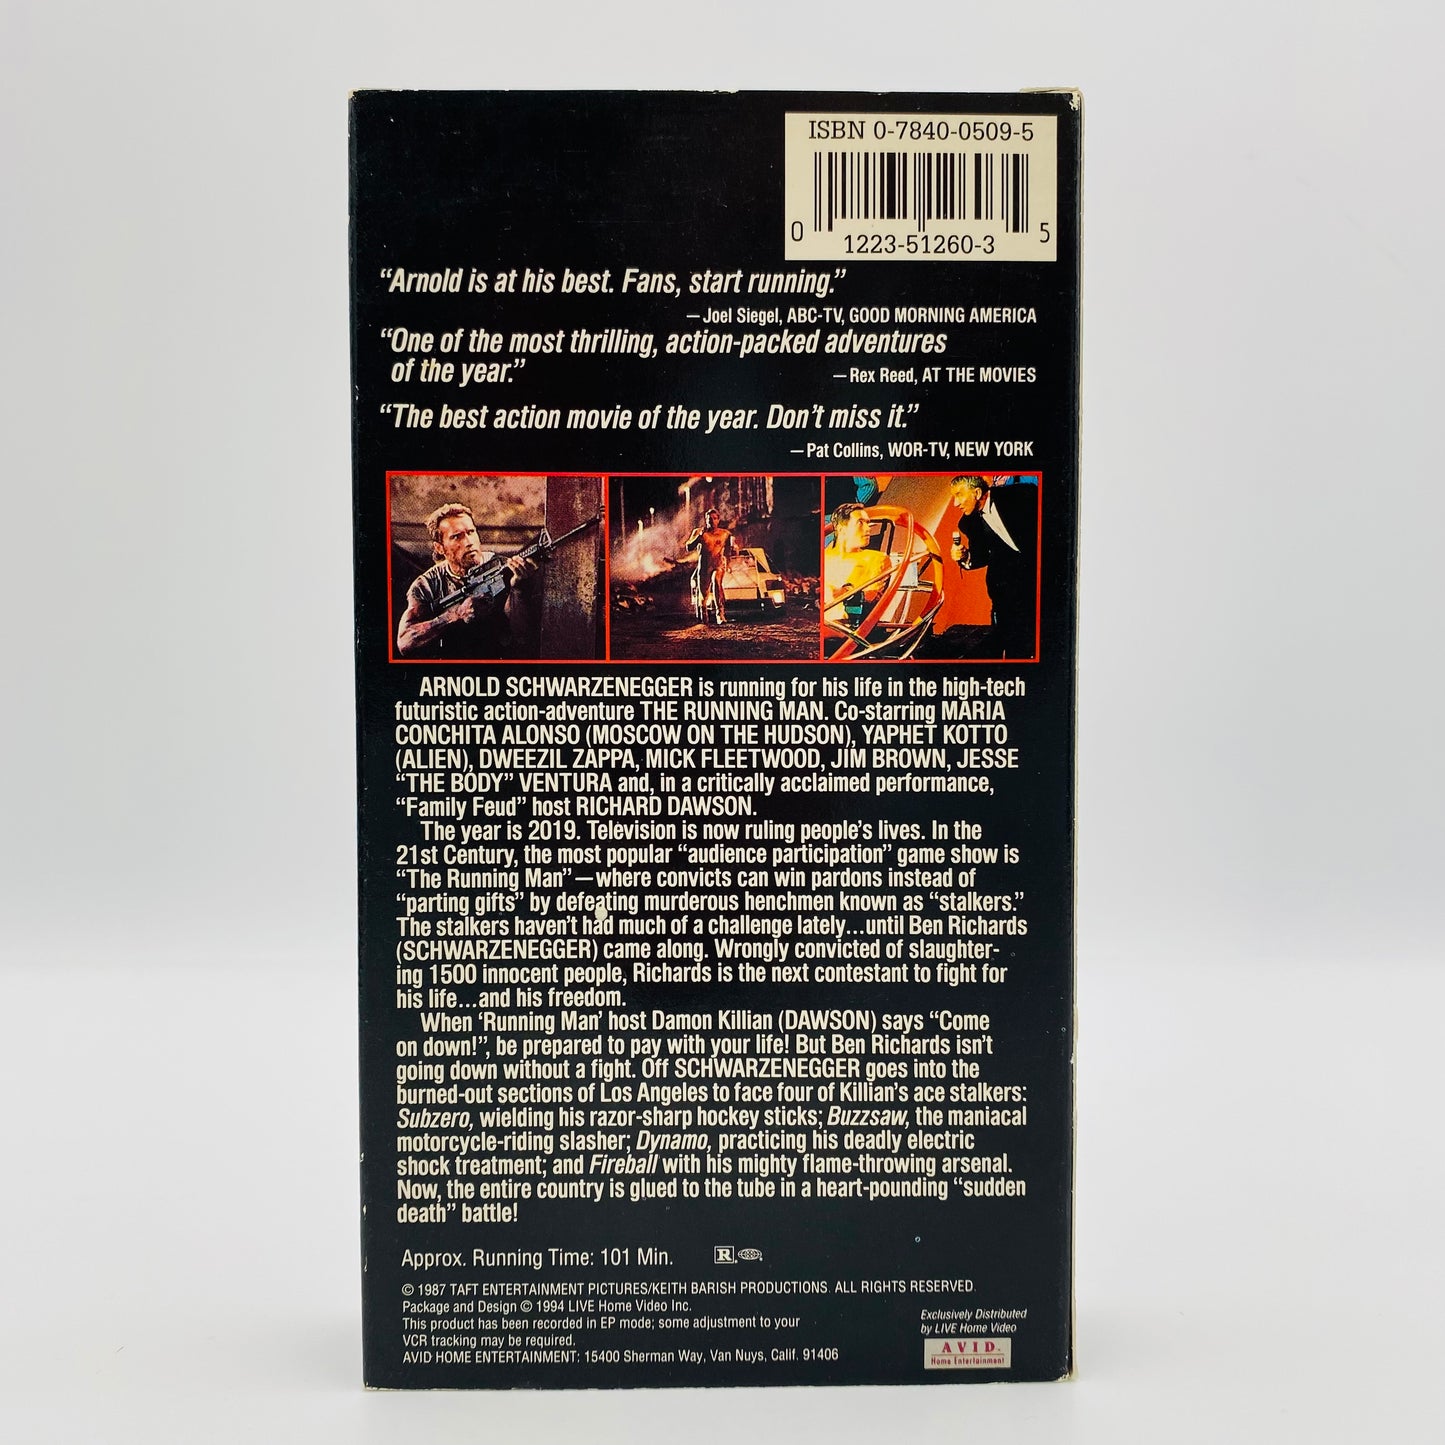 The Running Man VHS tape (1994) Avid Home Entertainment